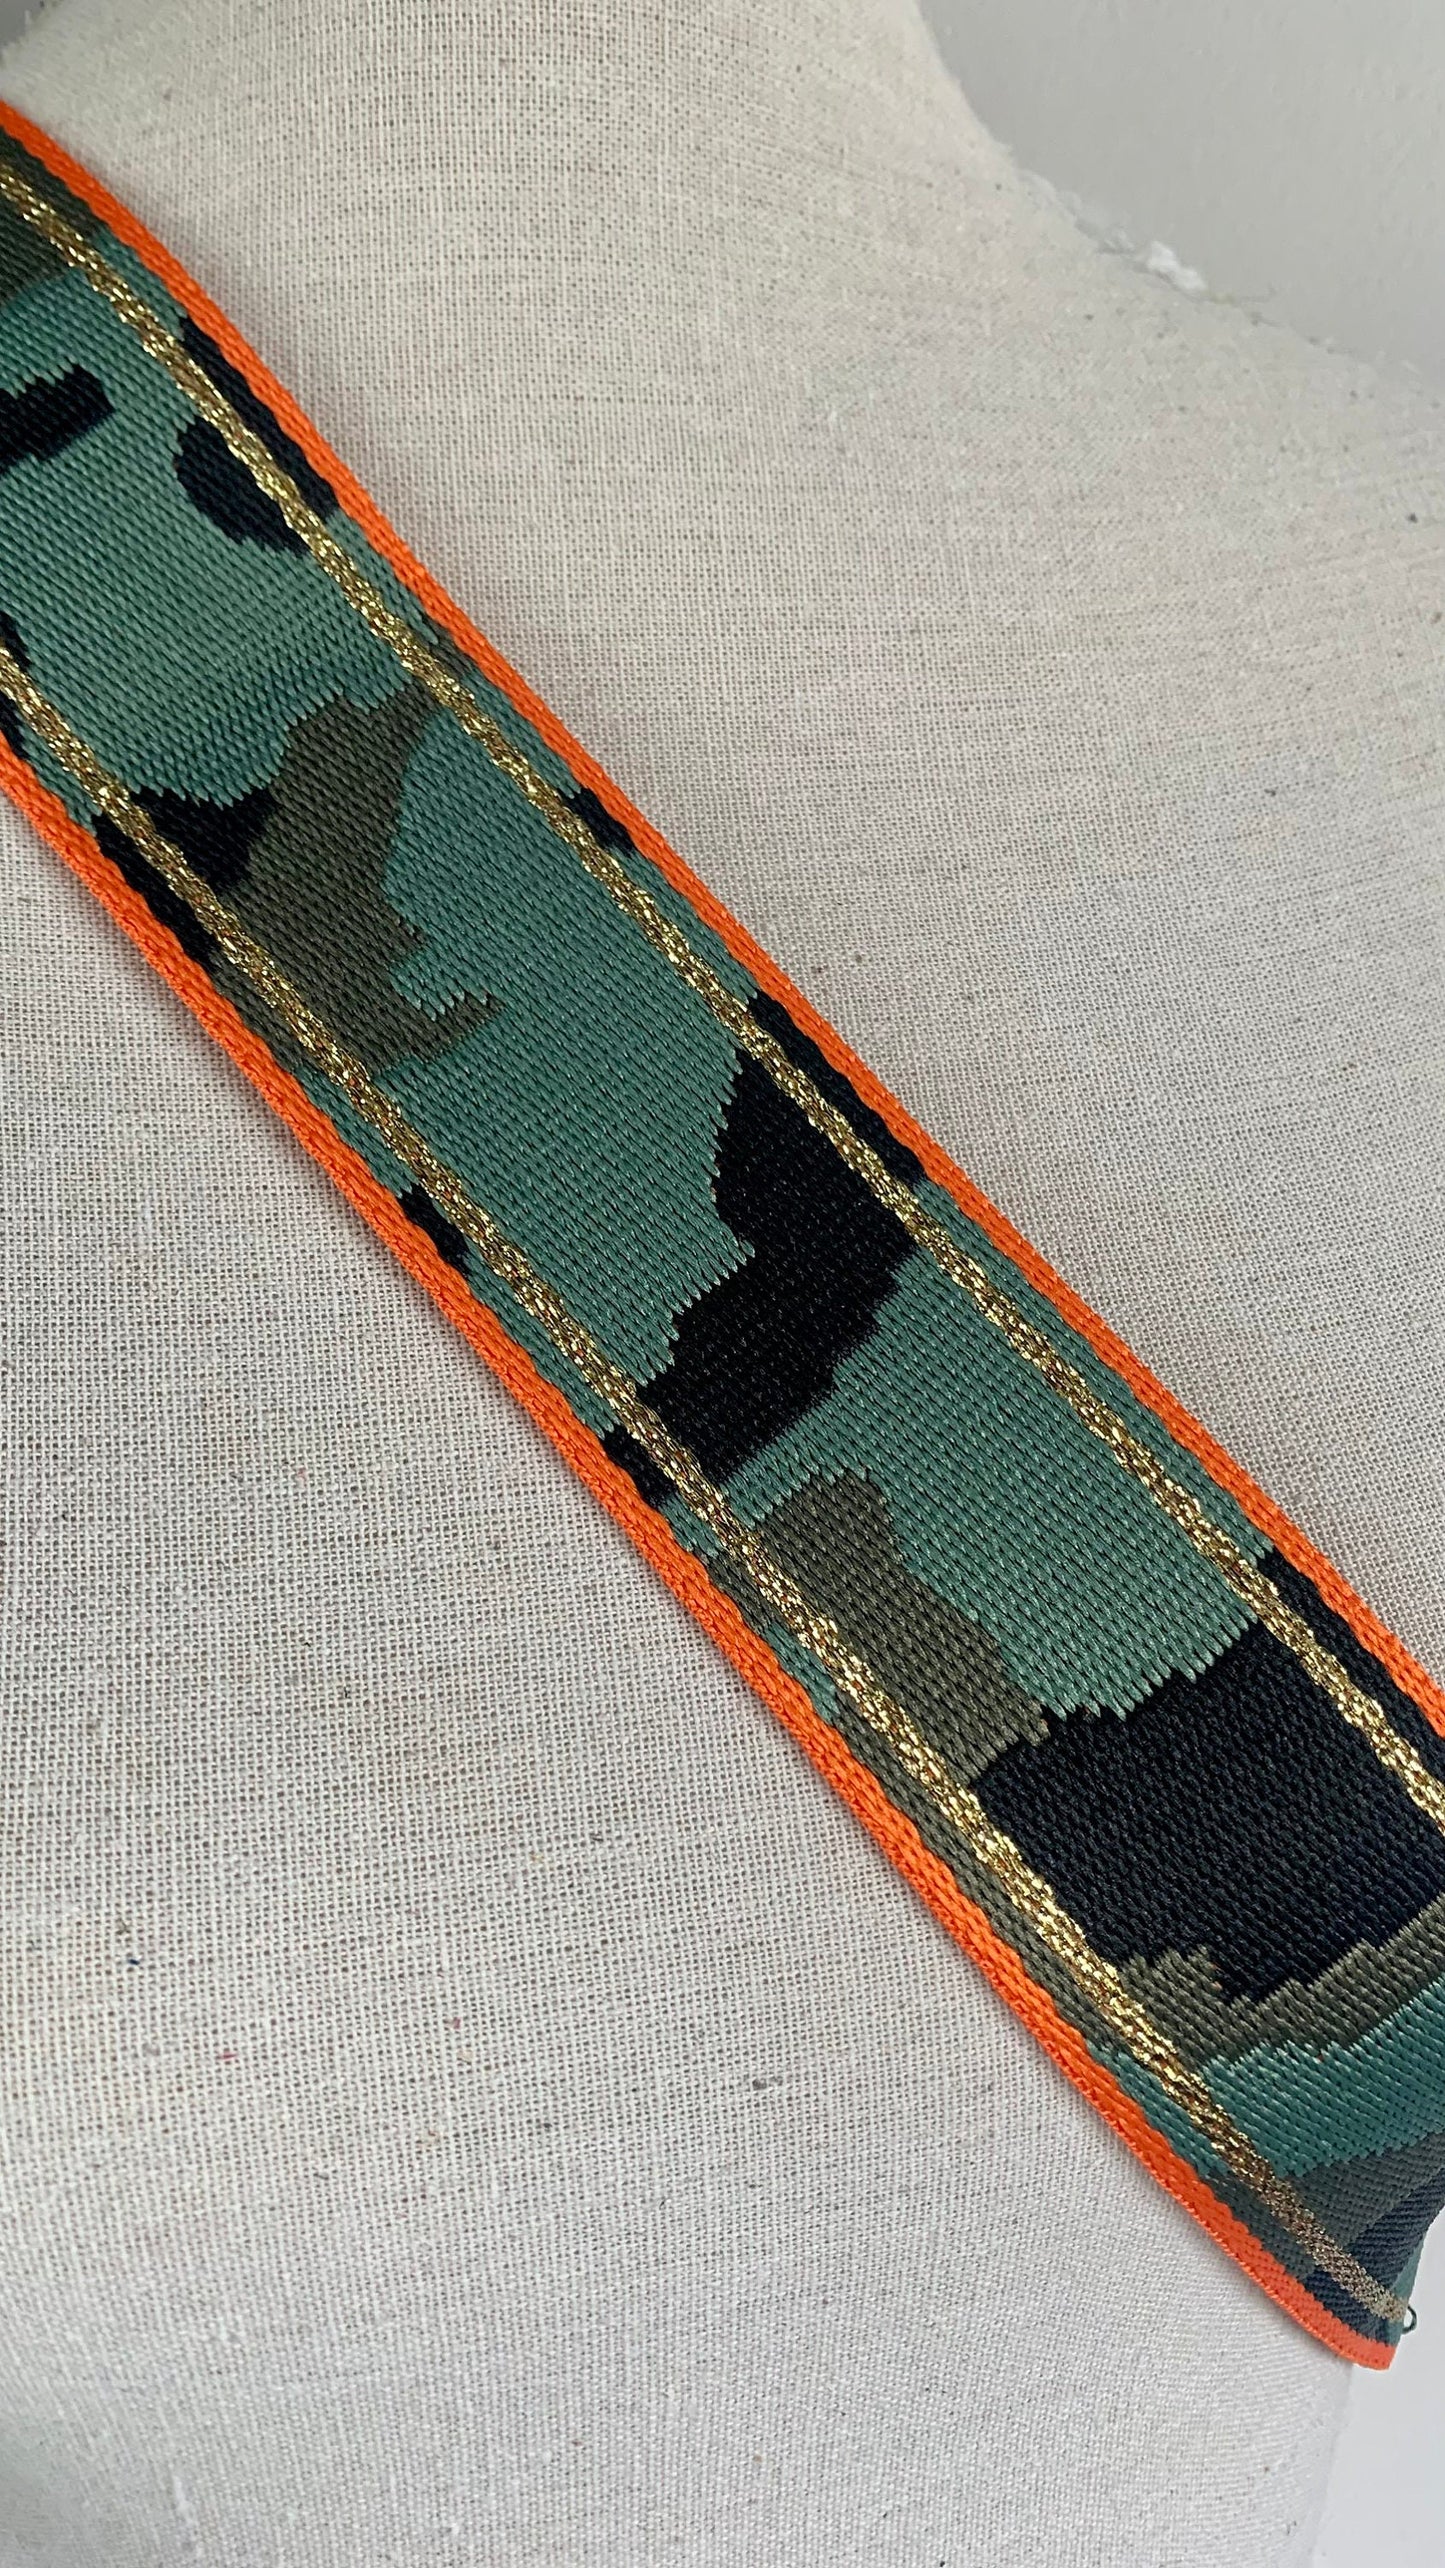 Camouflage & Orange Canvas Bag Strap